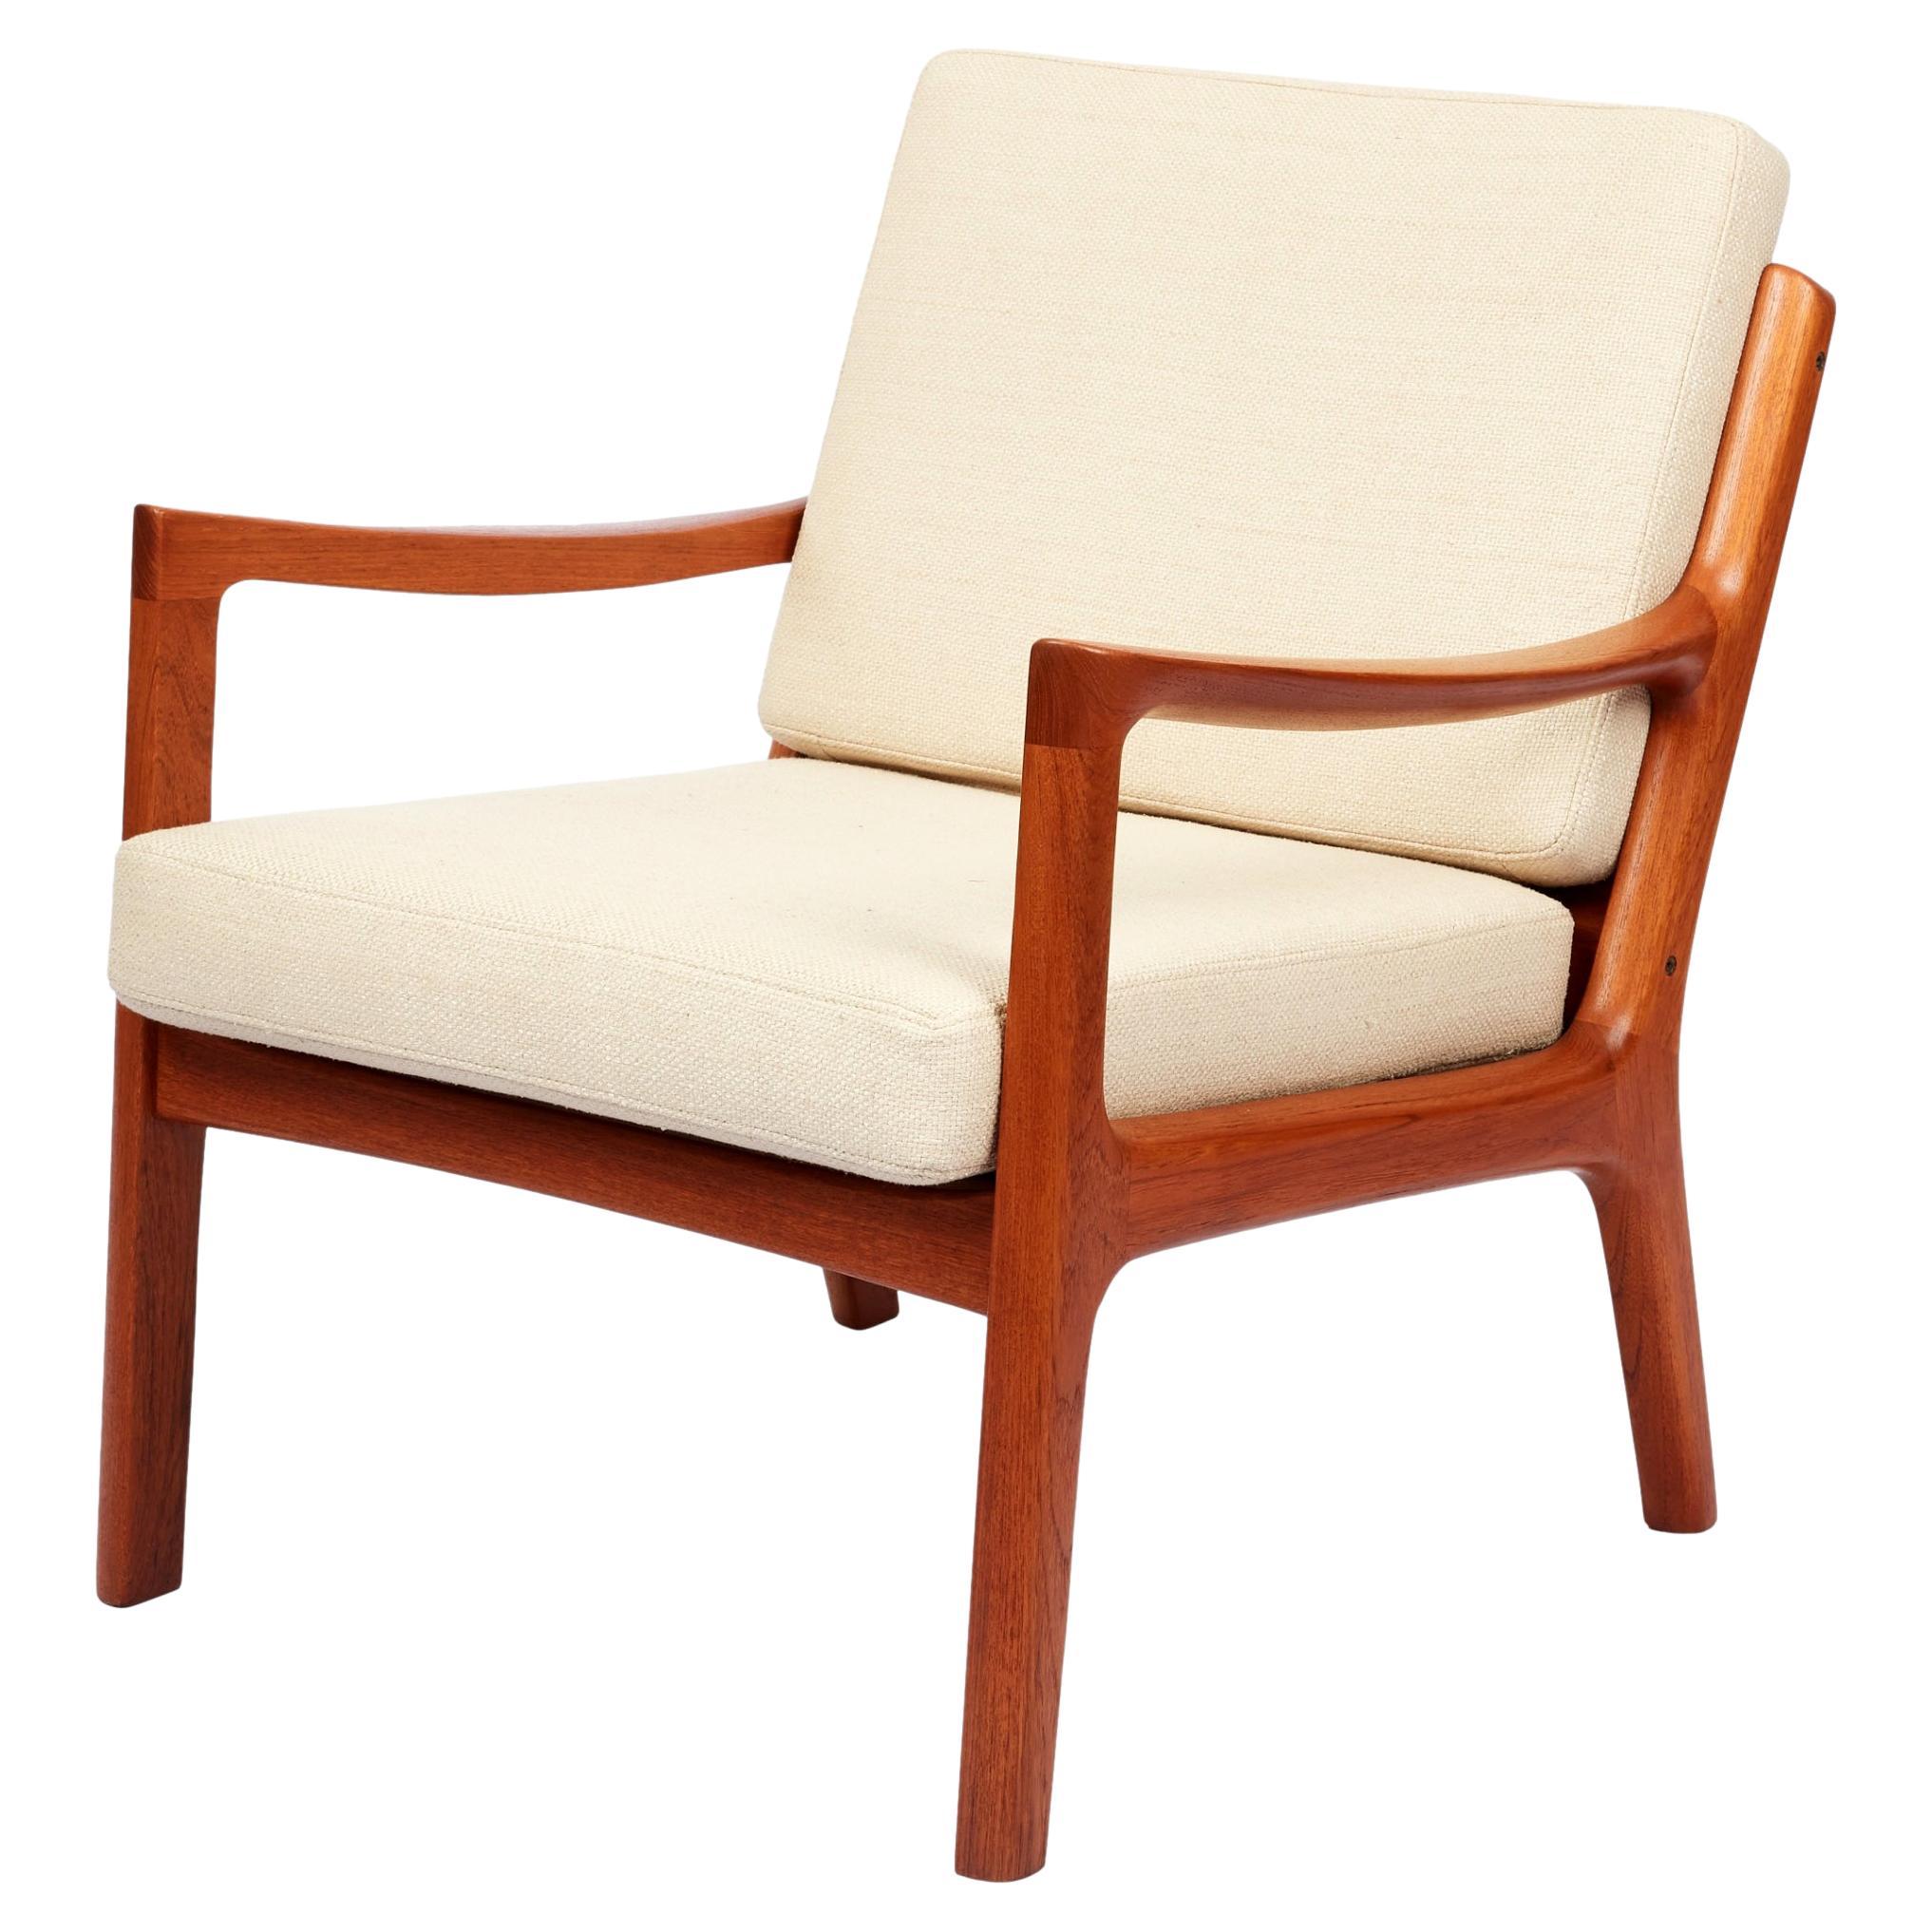 Ole Wanscher "SENATOR" Lounge Chair For Sale